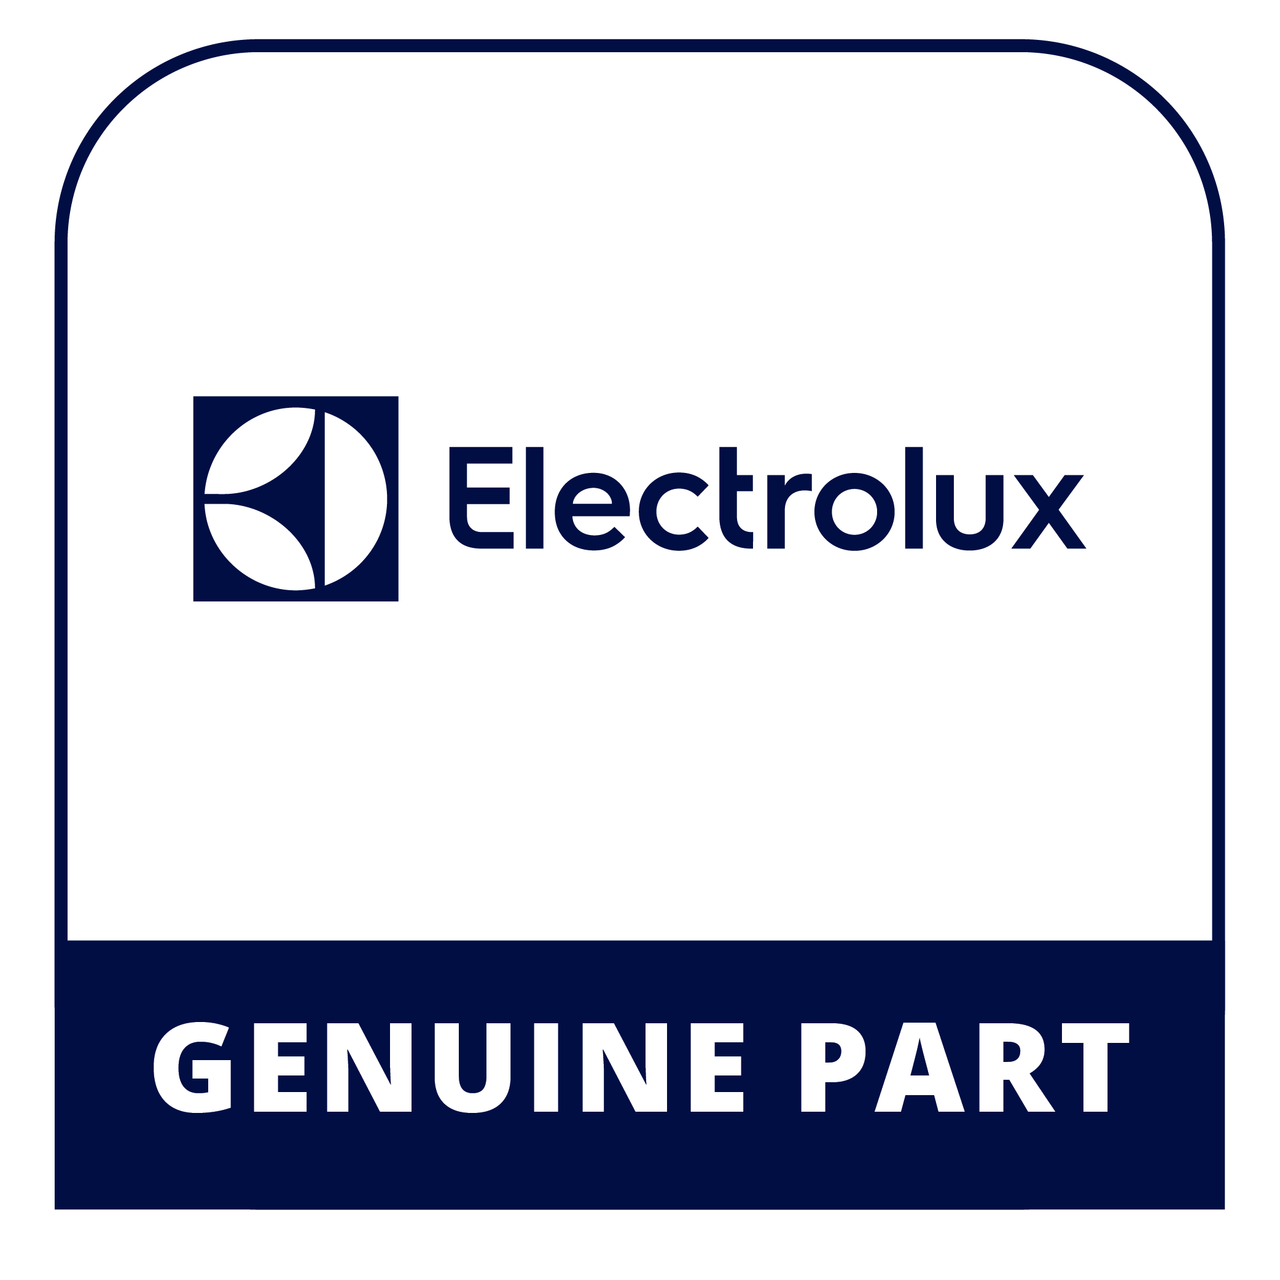 Frigidaire - Electrolux 5304500055 Box - Genuine Electrolux Part